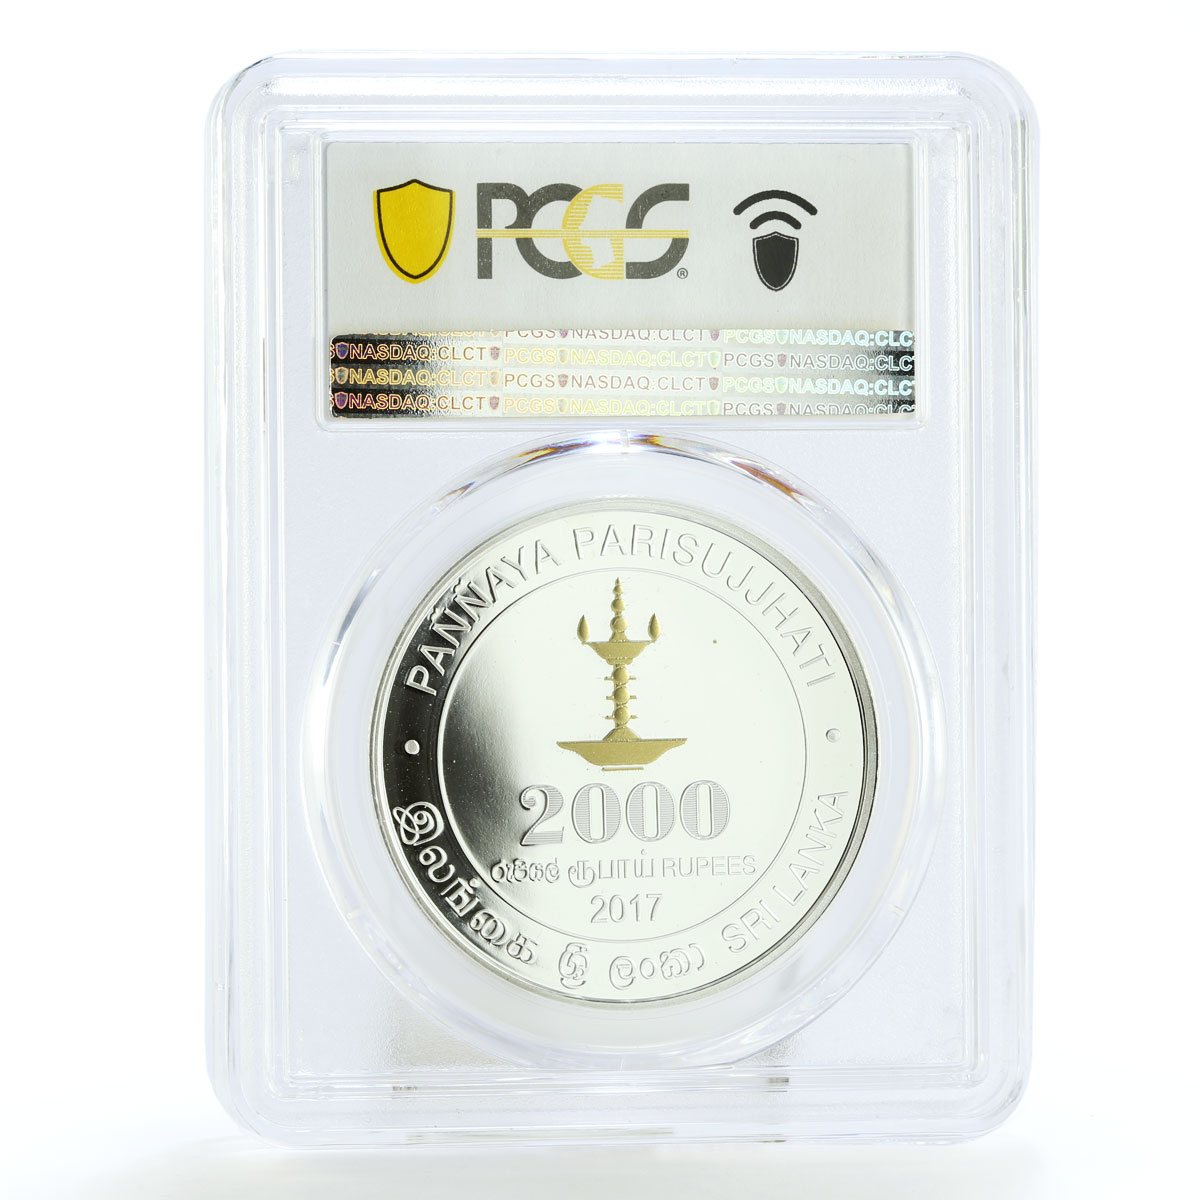 Sri Lanka 2000 rupees Centenary of Visakha Vidyalaya PR69 PCGS silver coin 2017